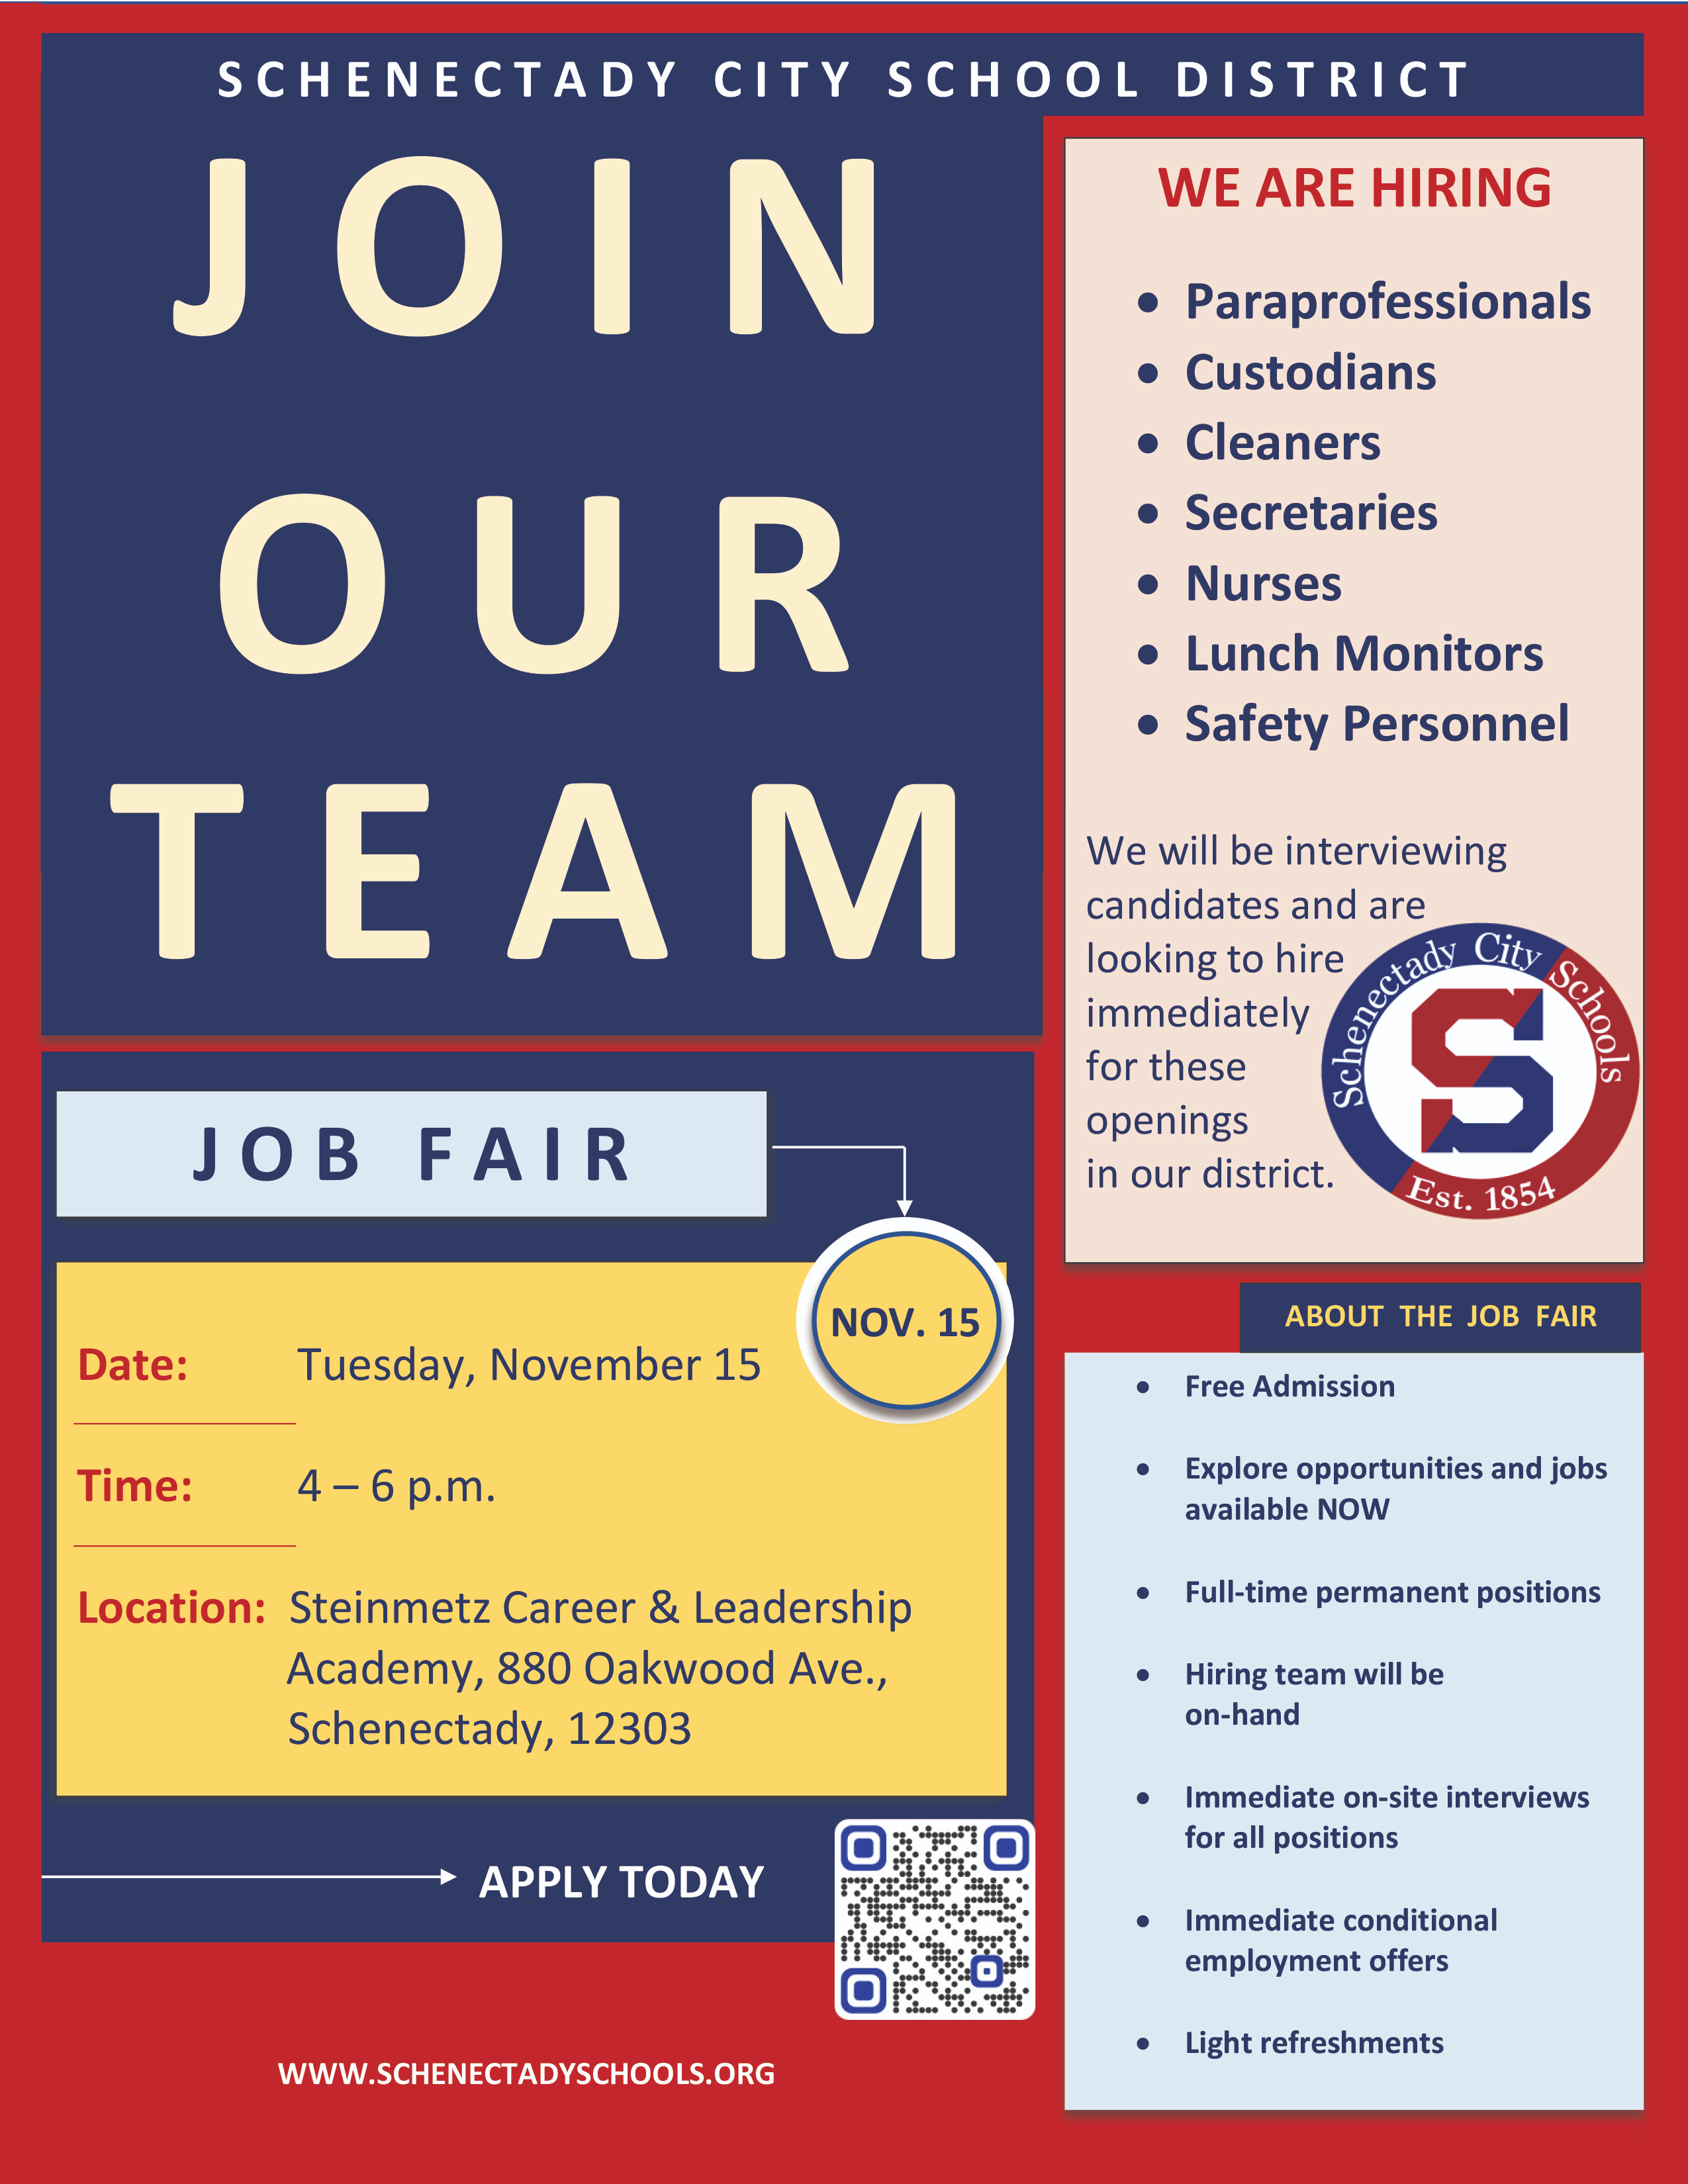 Don't miss our job fair on November 15